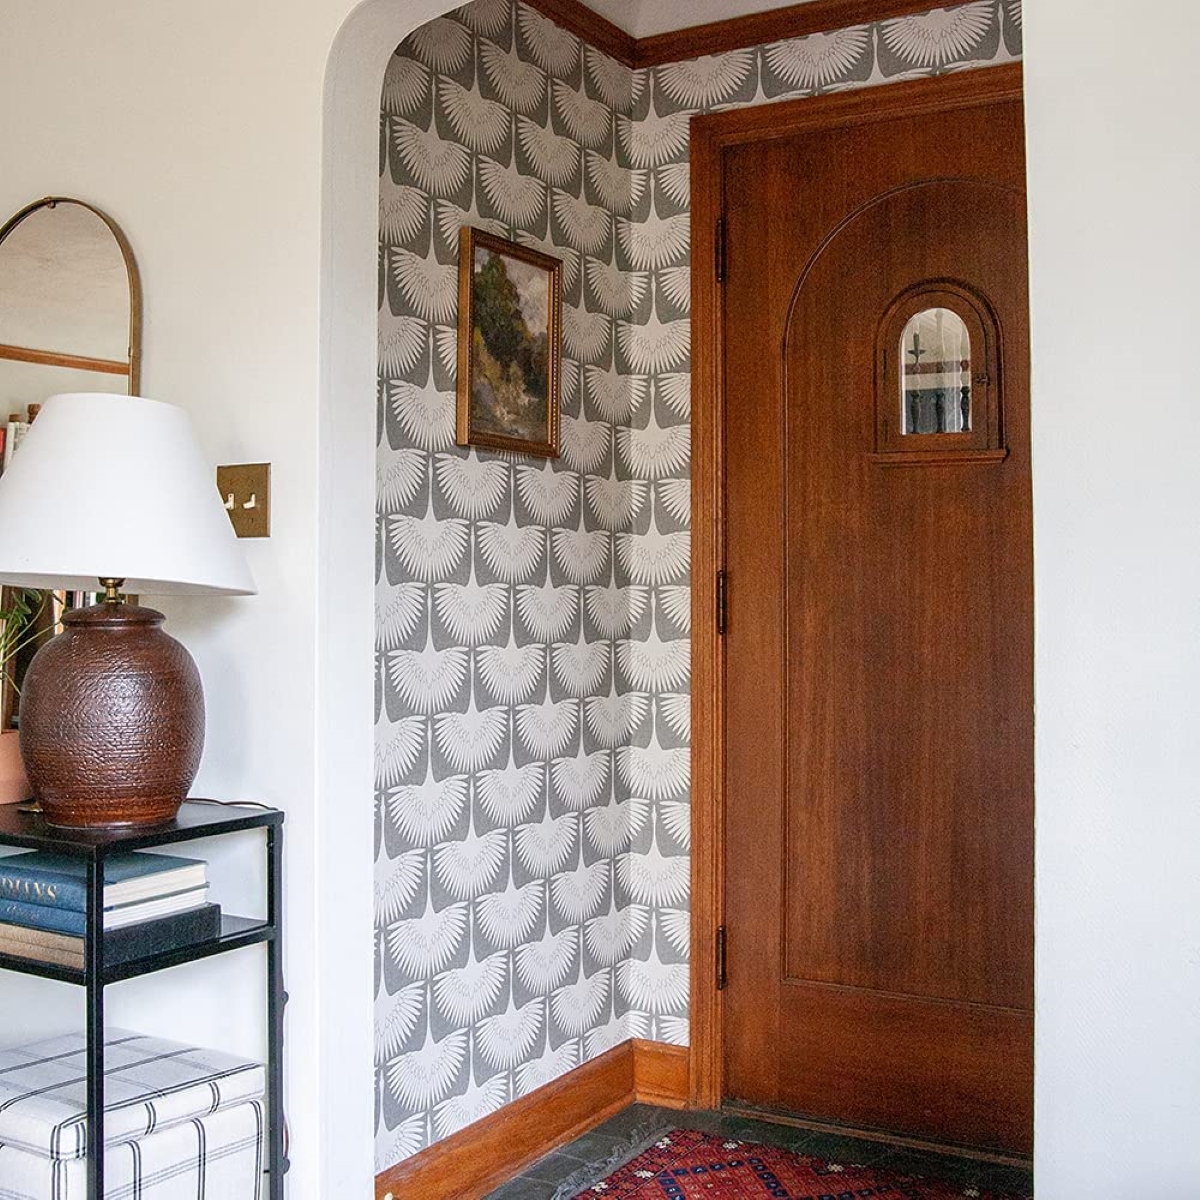 apartment decor ideas - entry way wallpaper